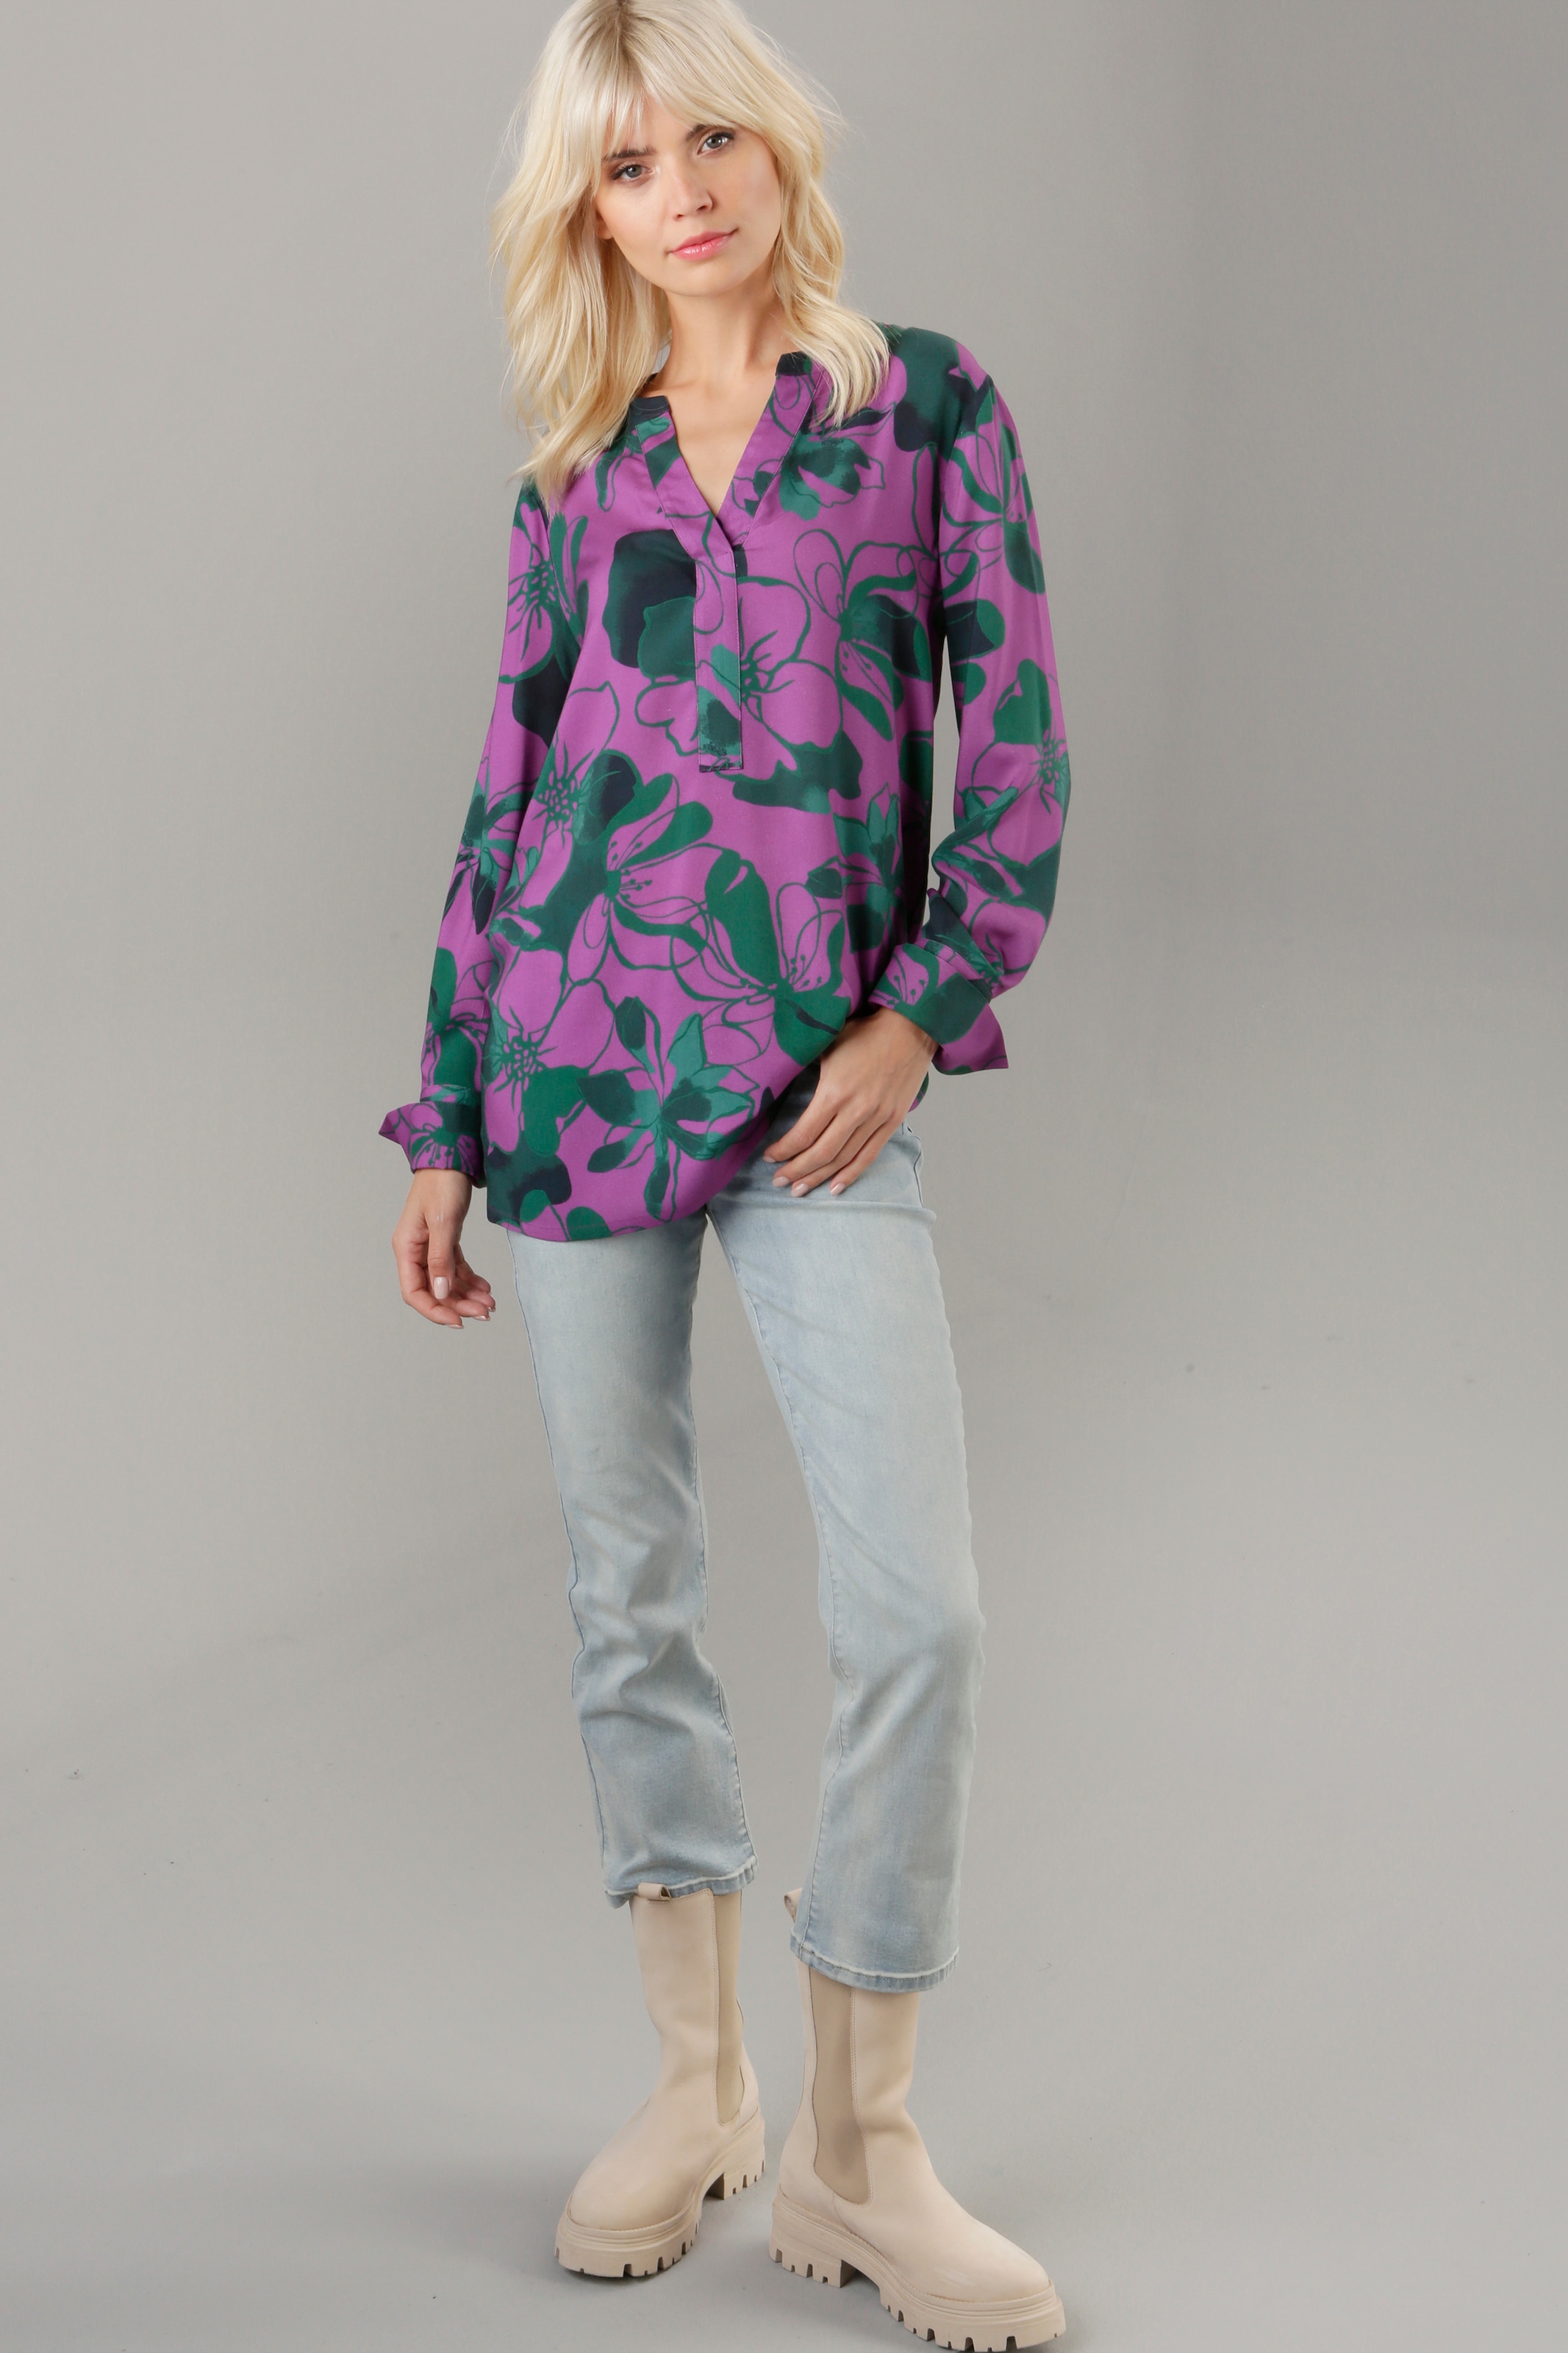 Aniston SELECTED in OTTO Blütendruck Farbkombination bei bestellen aufregender Longbluse, mit